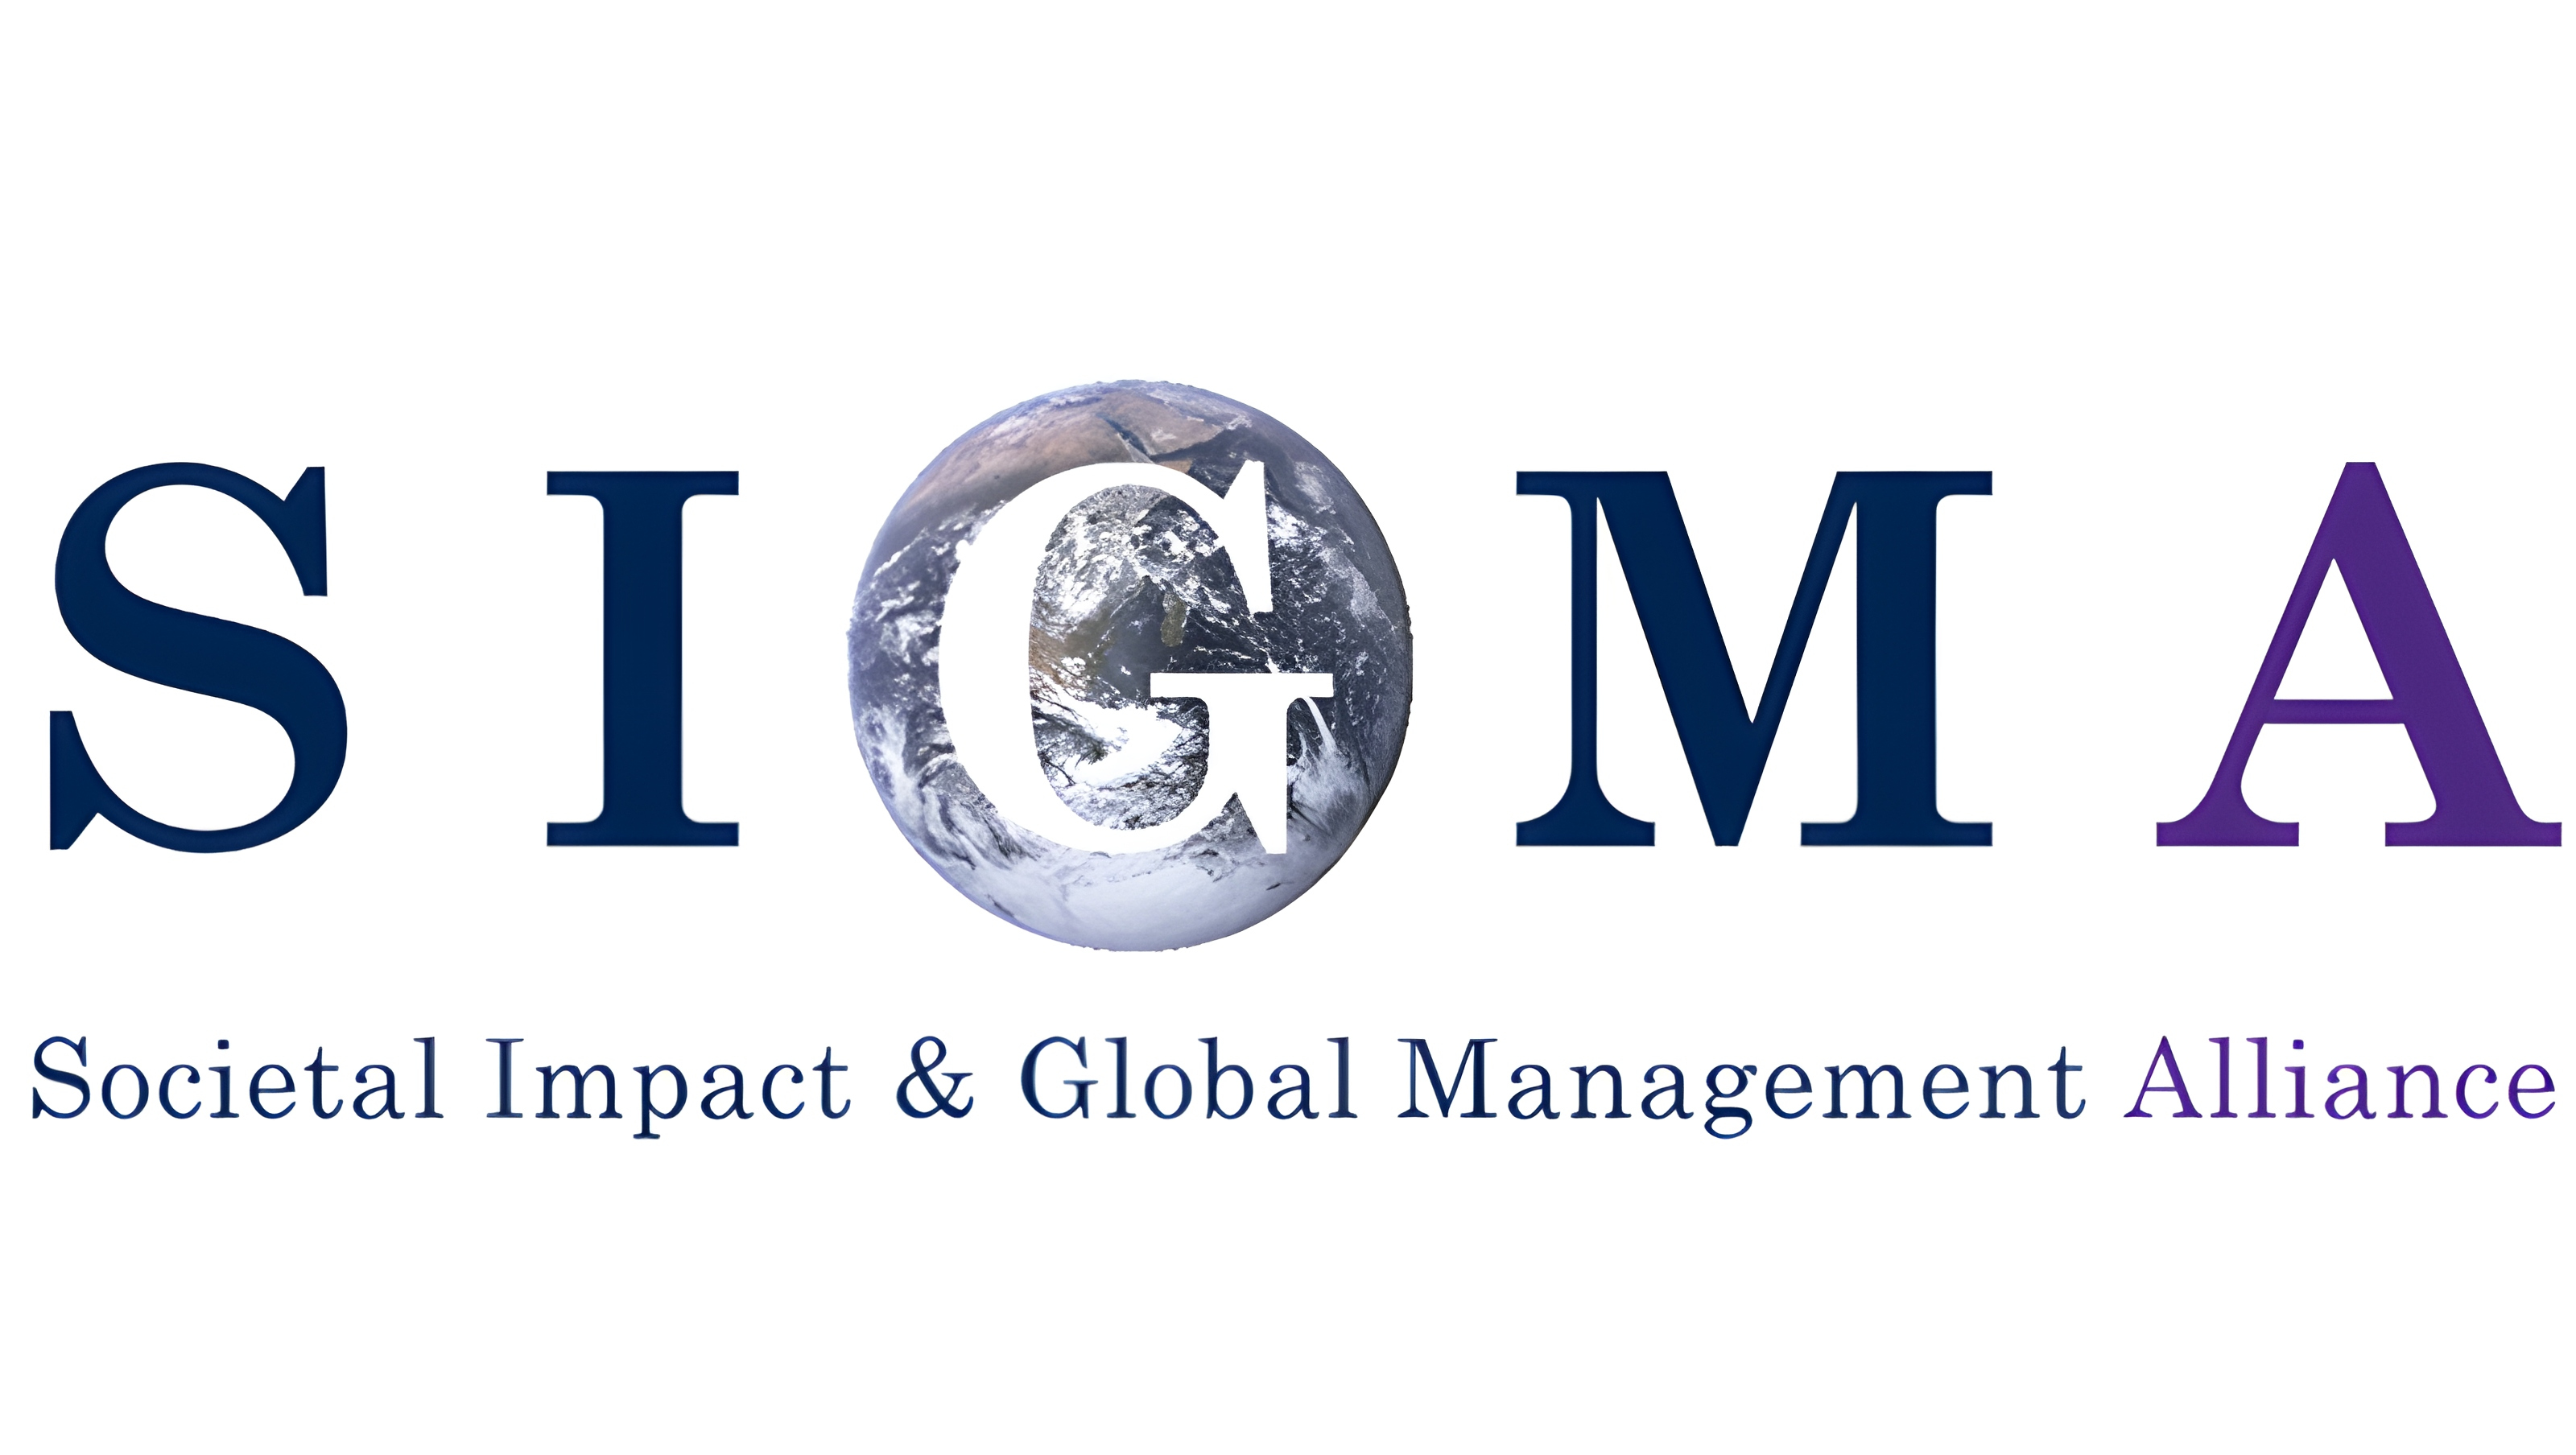 SIGMA Logo